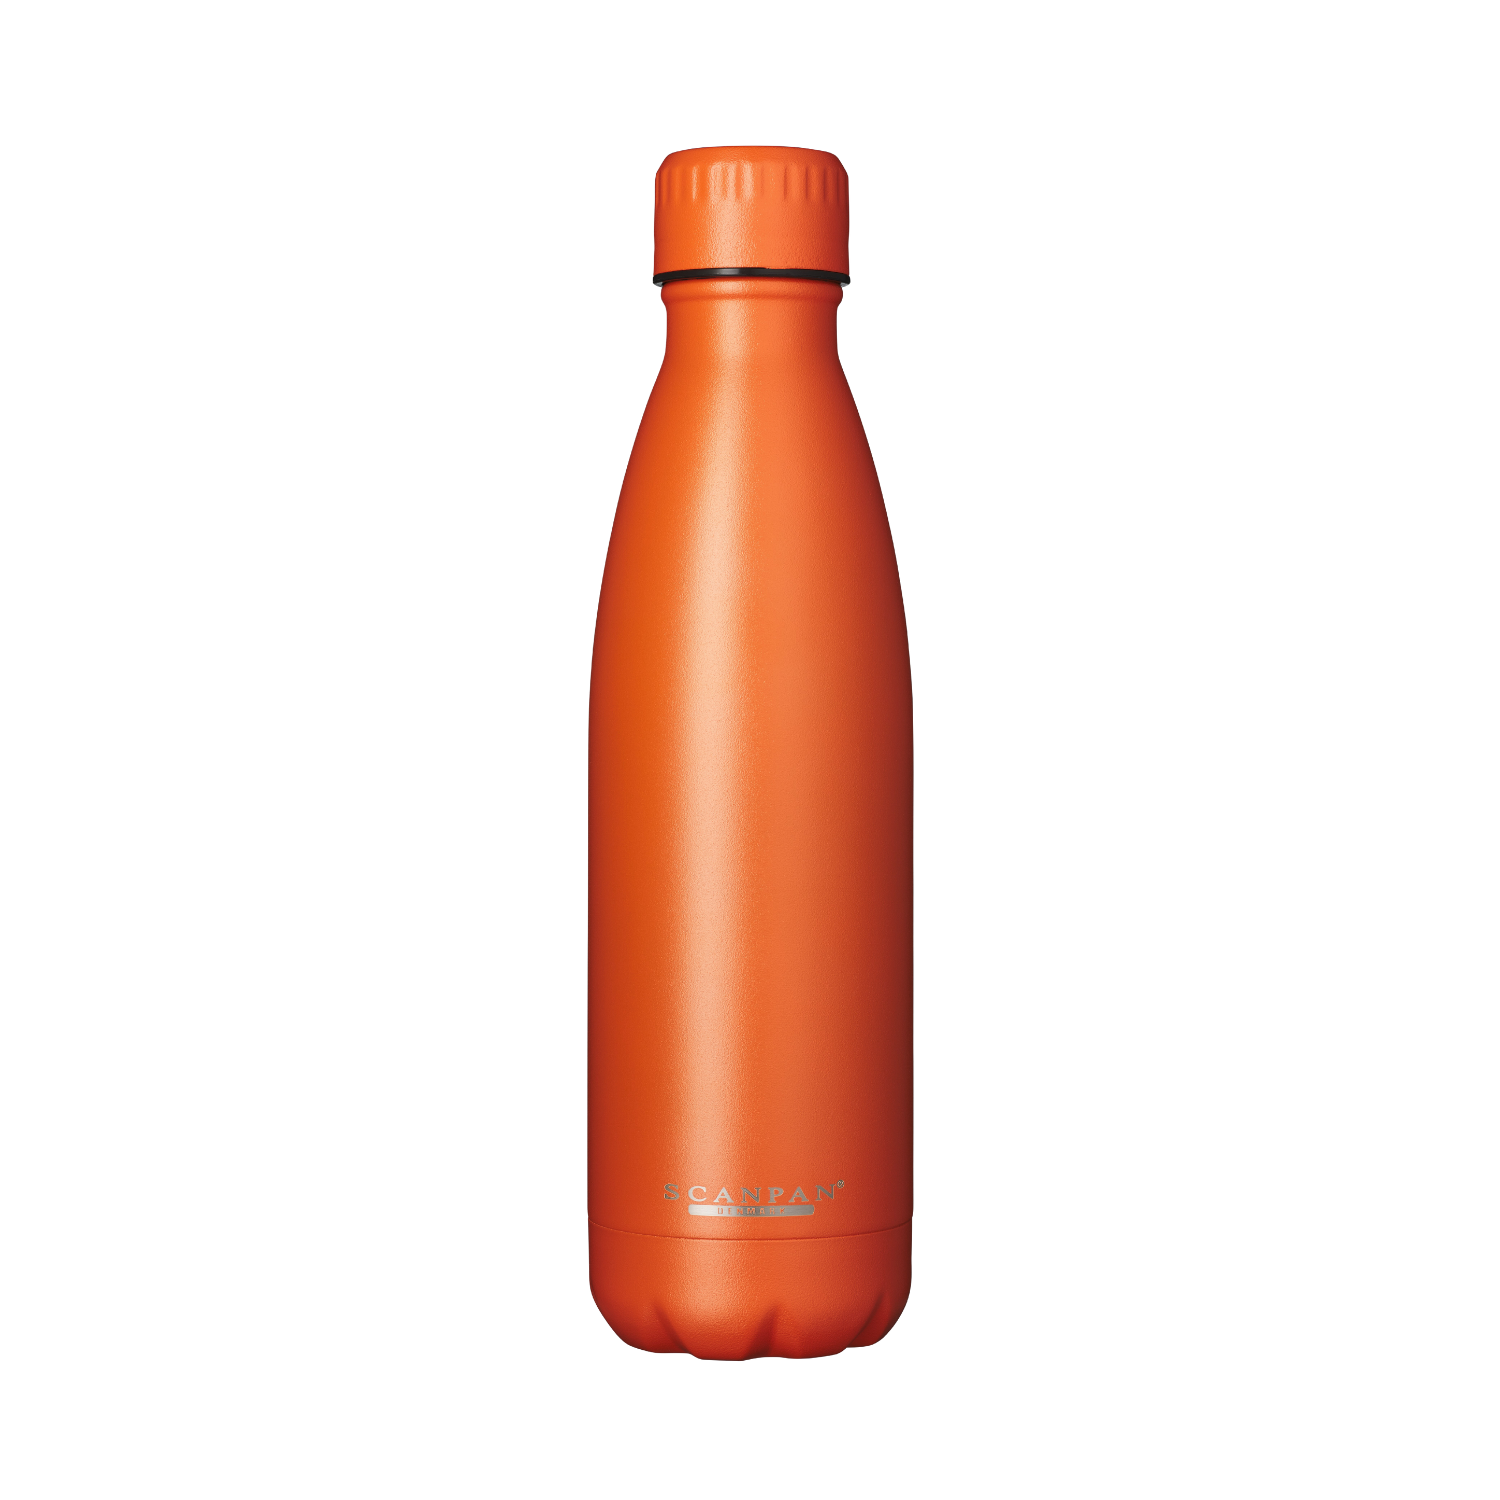 SCANPAN NEW To Go 500ml Bottle - Orange